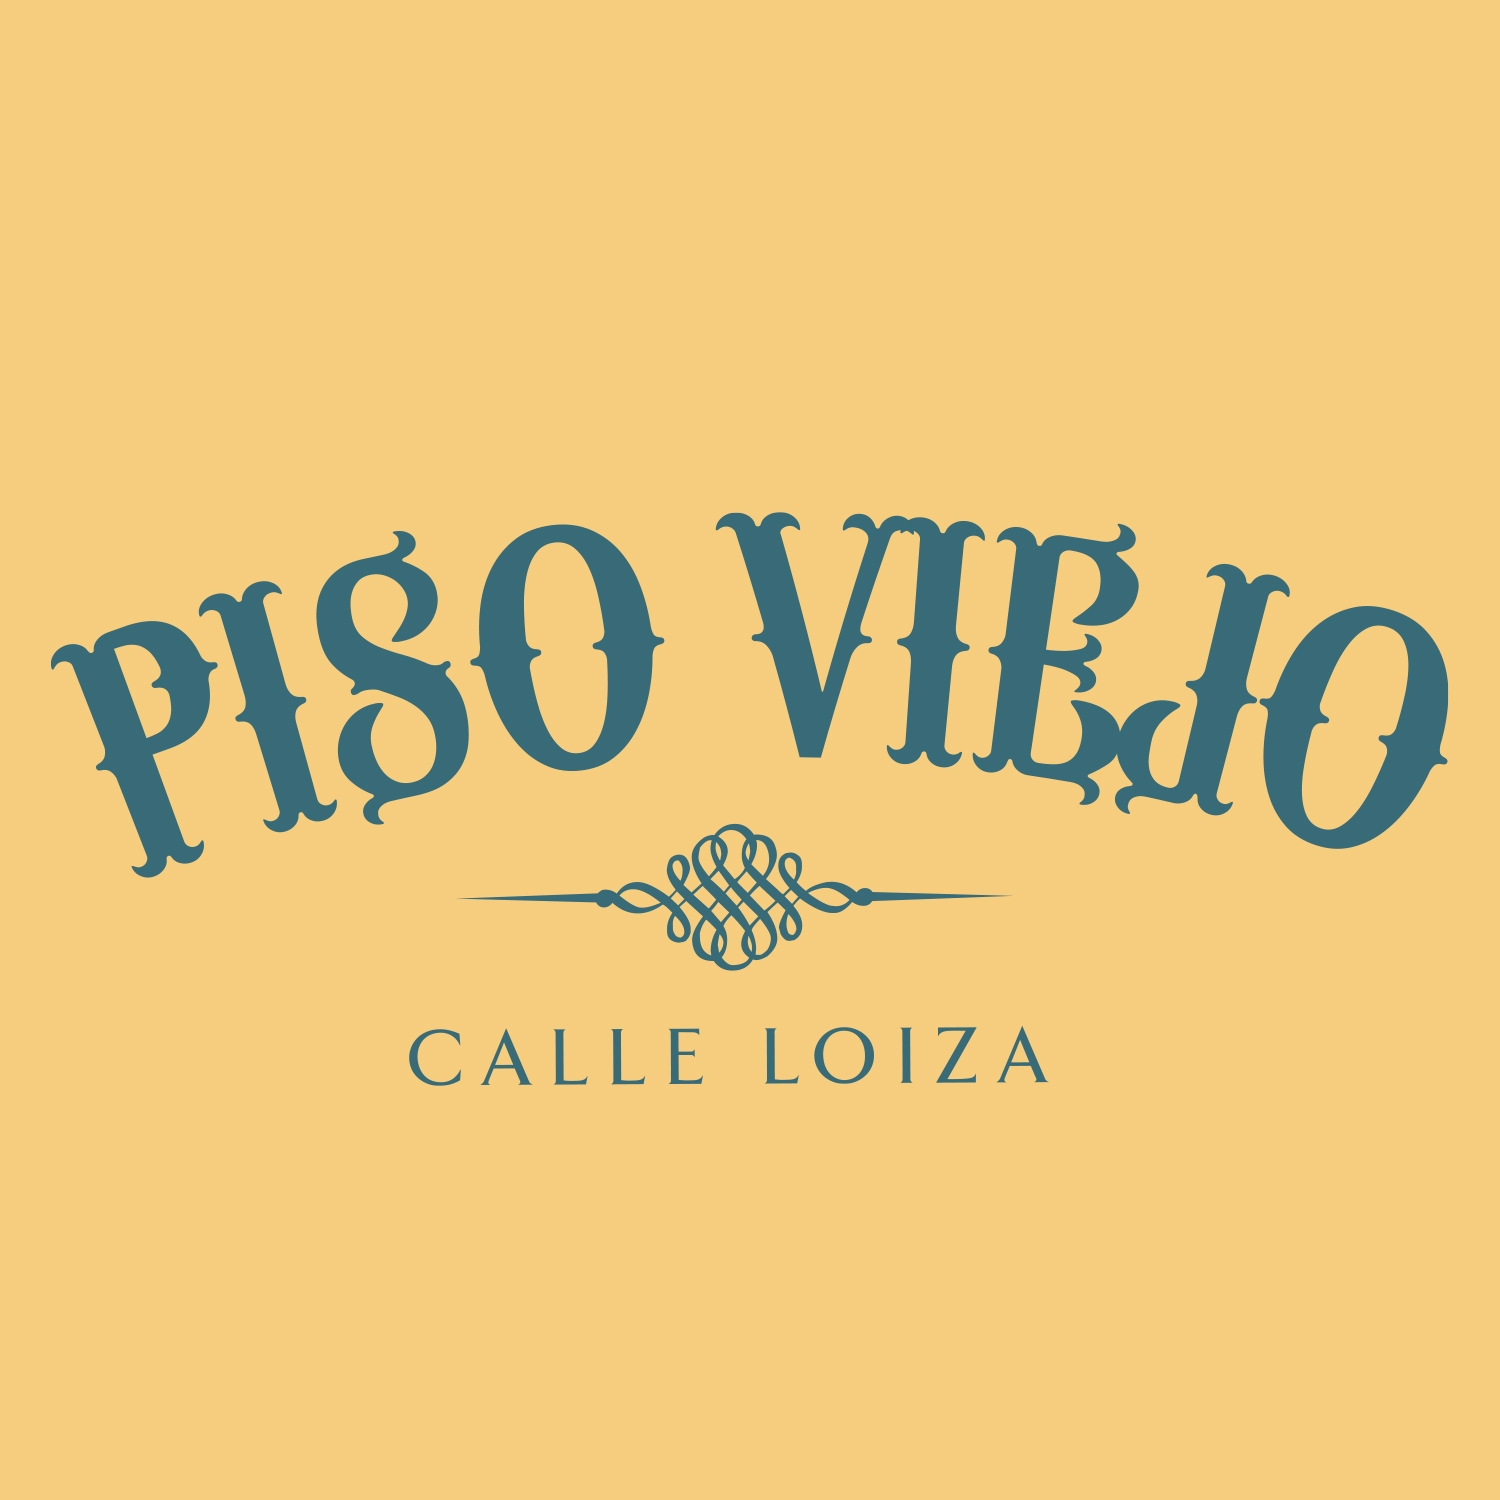 Piso Viejo Bar & Restaurant